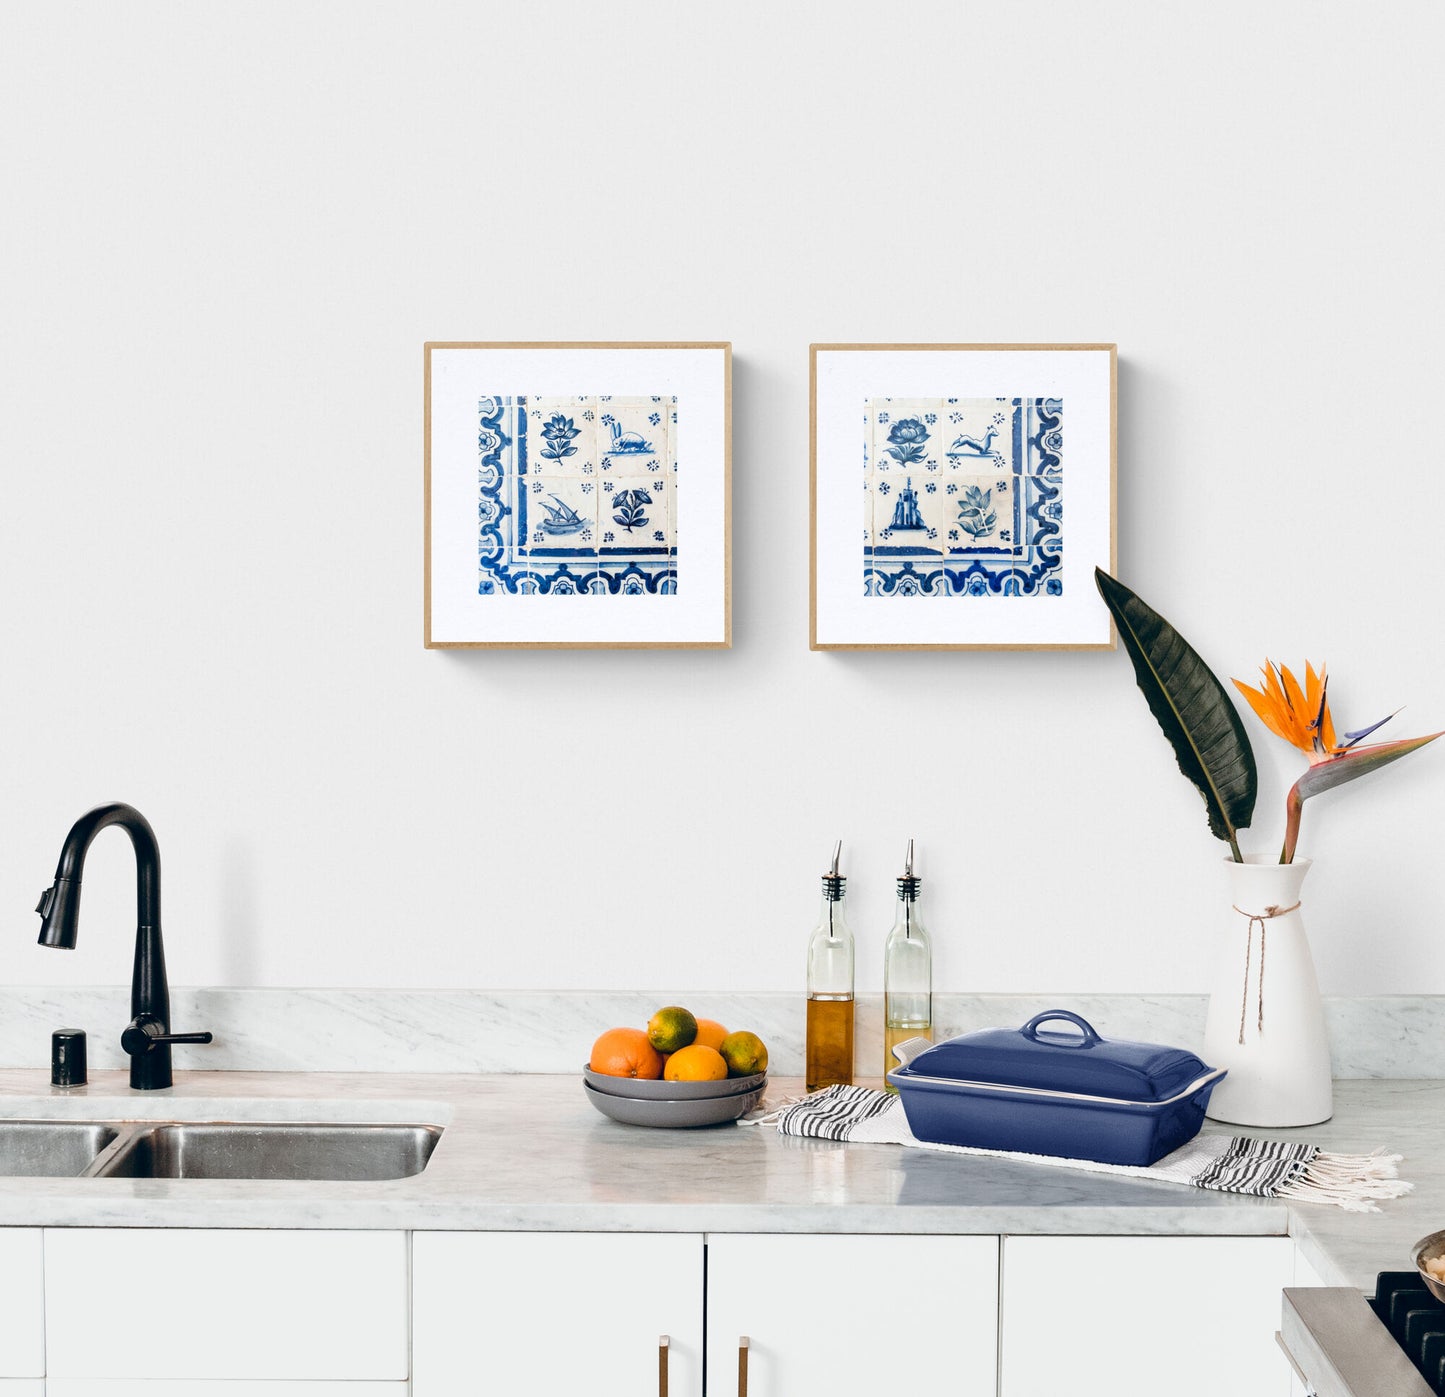 Two Square LIsbon Tile Photograph Prints in a Kitchen